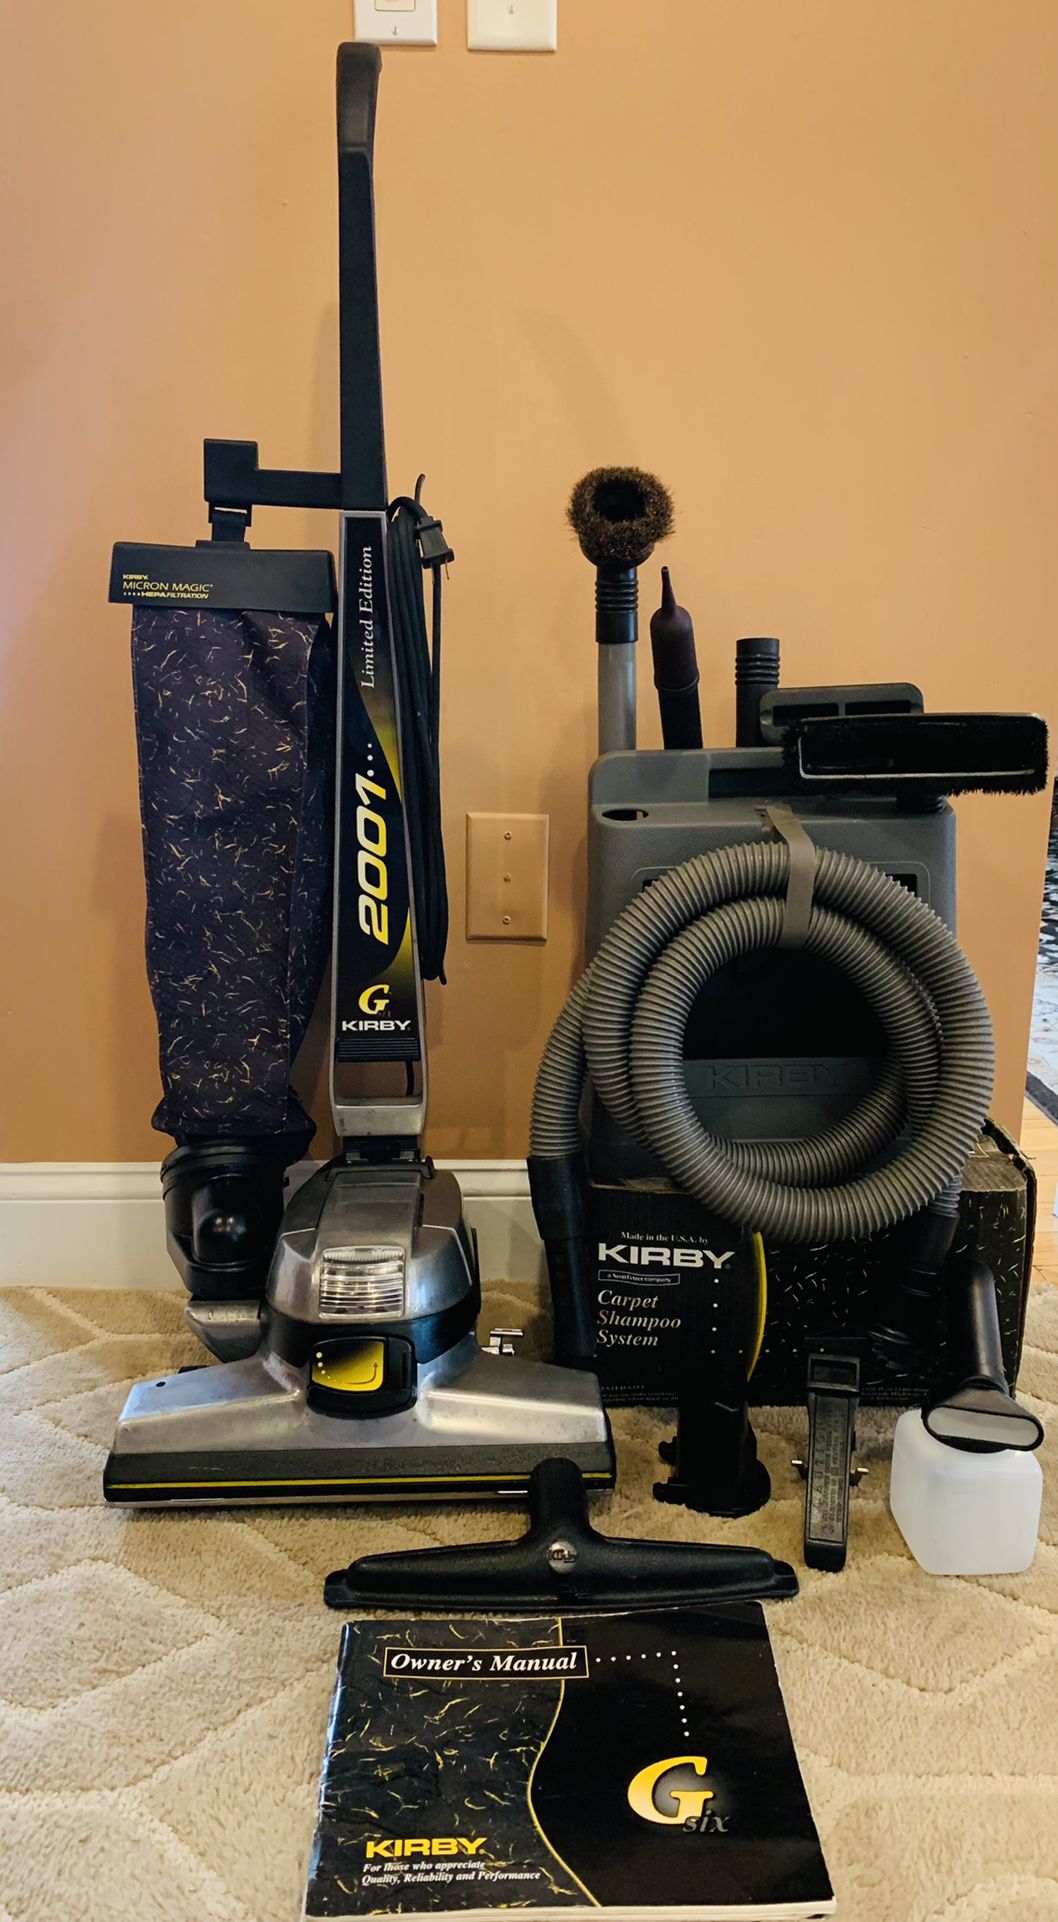 Kirby G6 vacuum cleaner